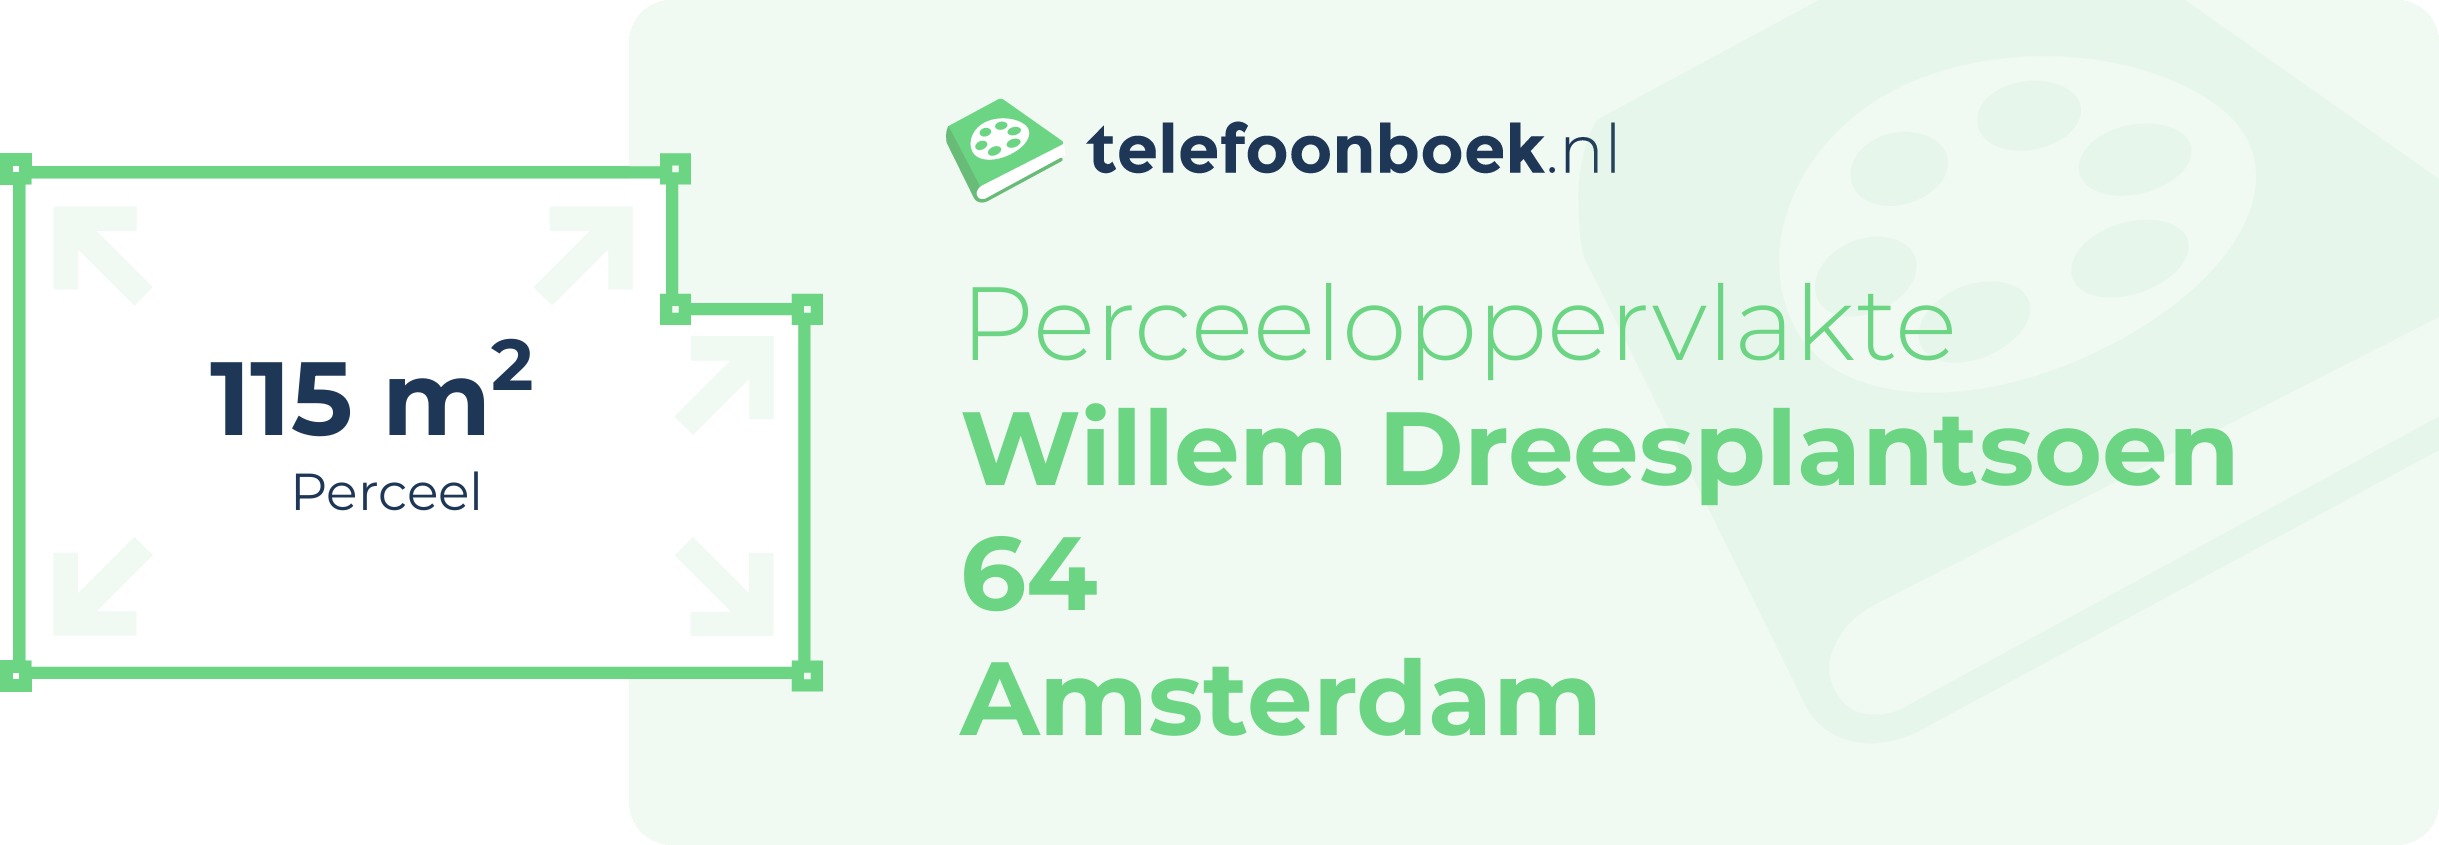 Perceeloppervlakte Willem Dreesplantsoen 64 Amsterdam